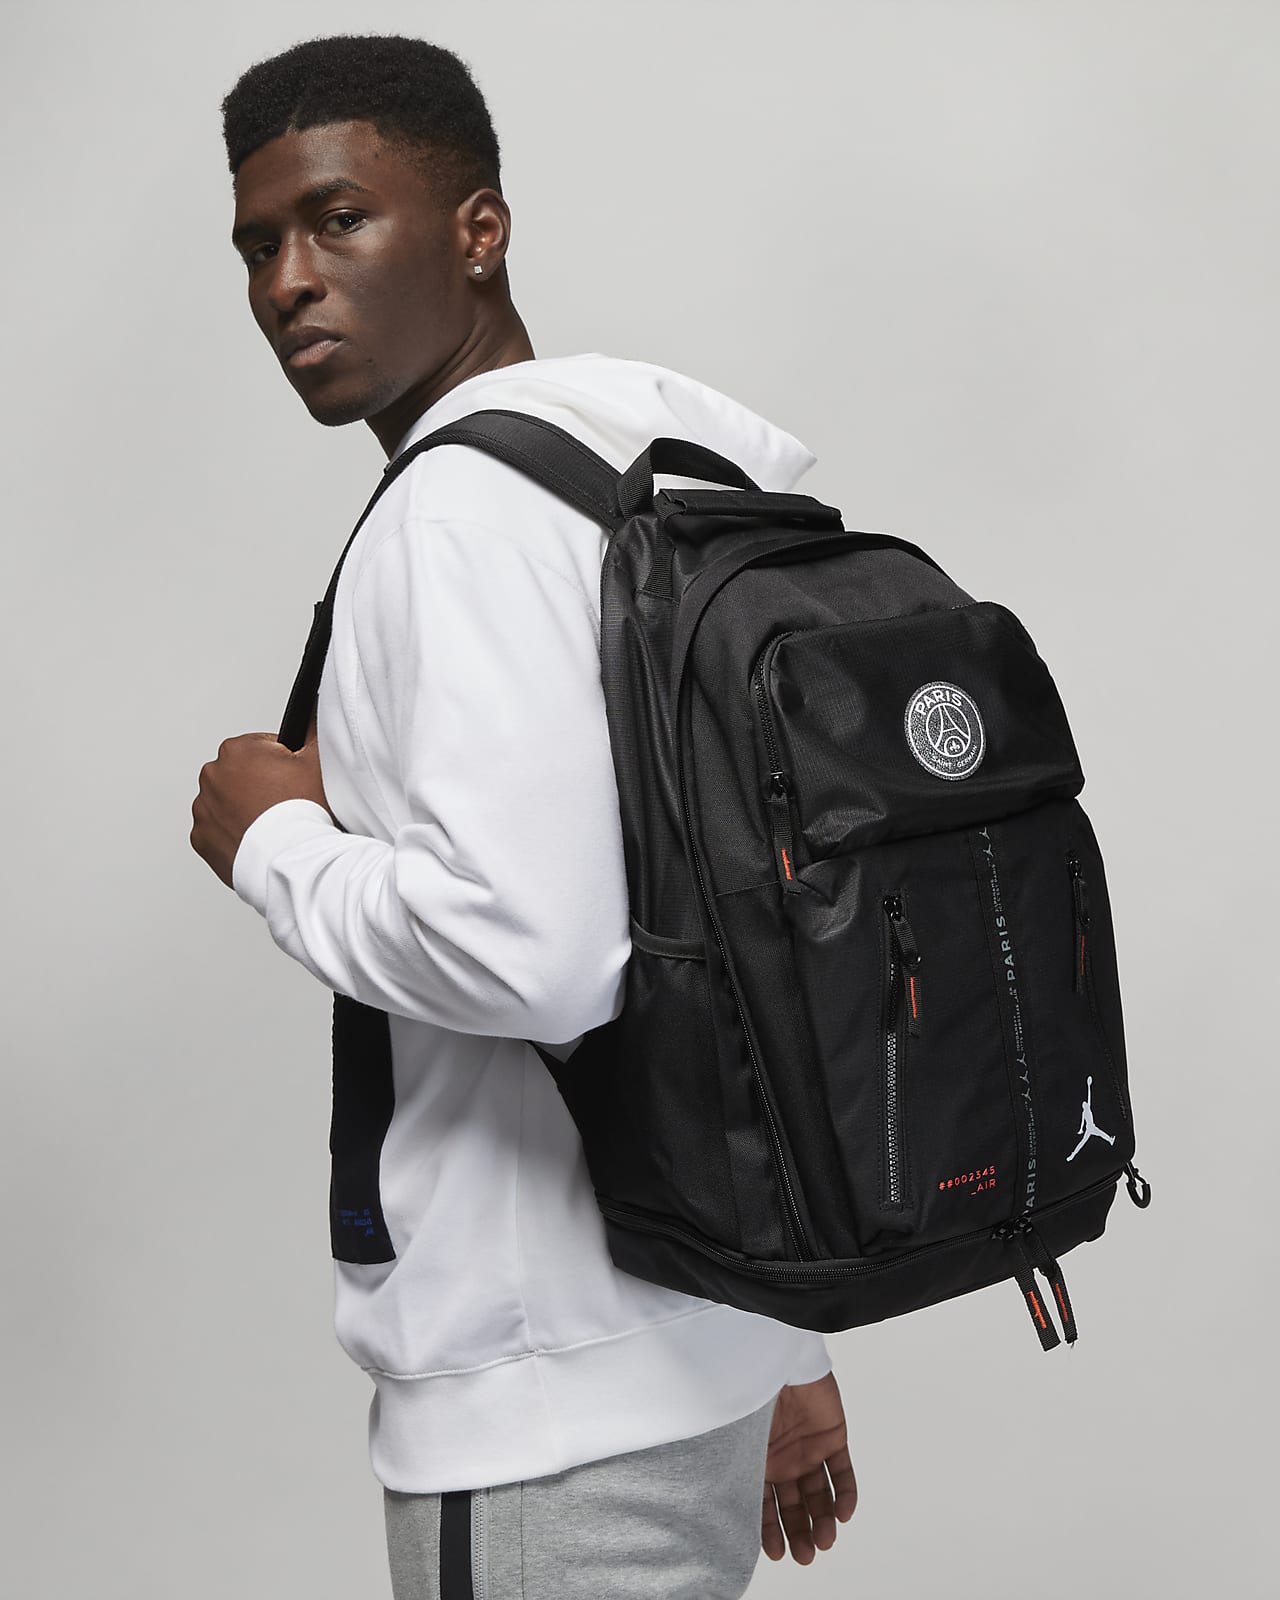 Jordan x PSG Backpack リュック パリサンジェルマン www